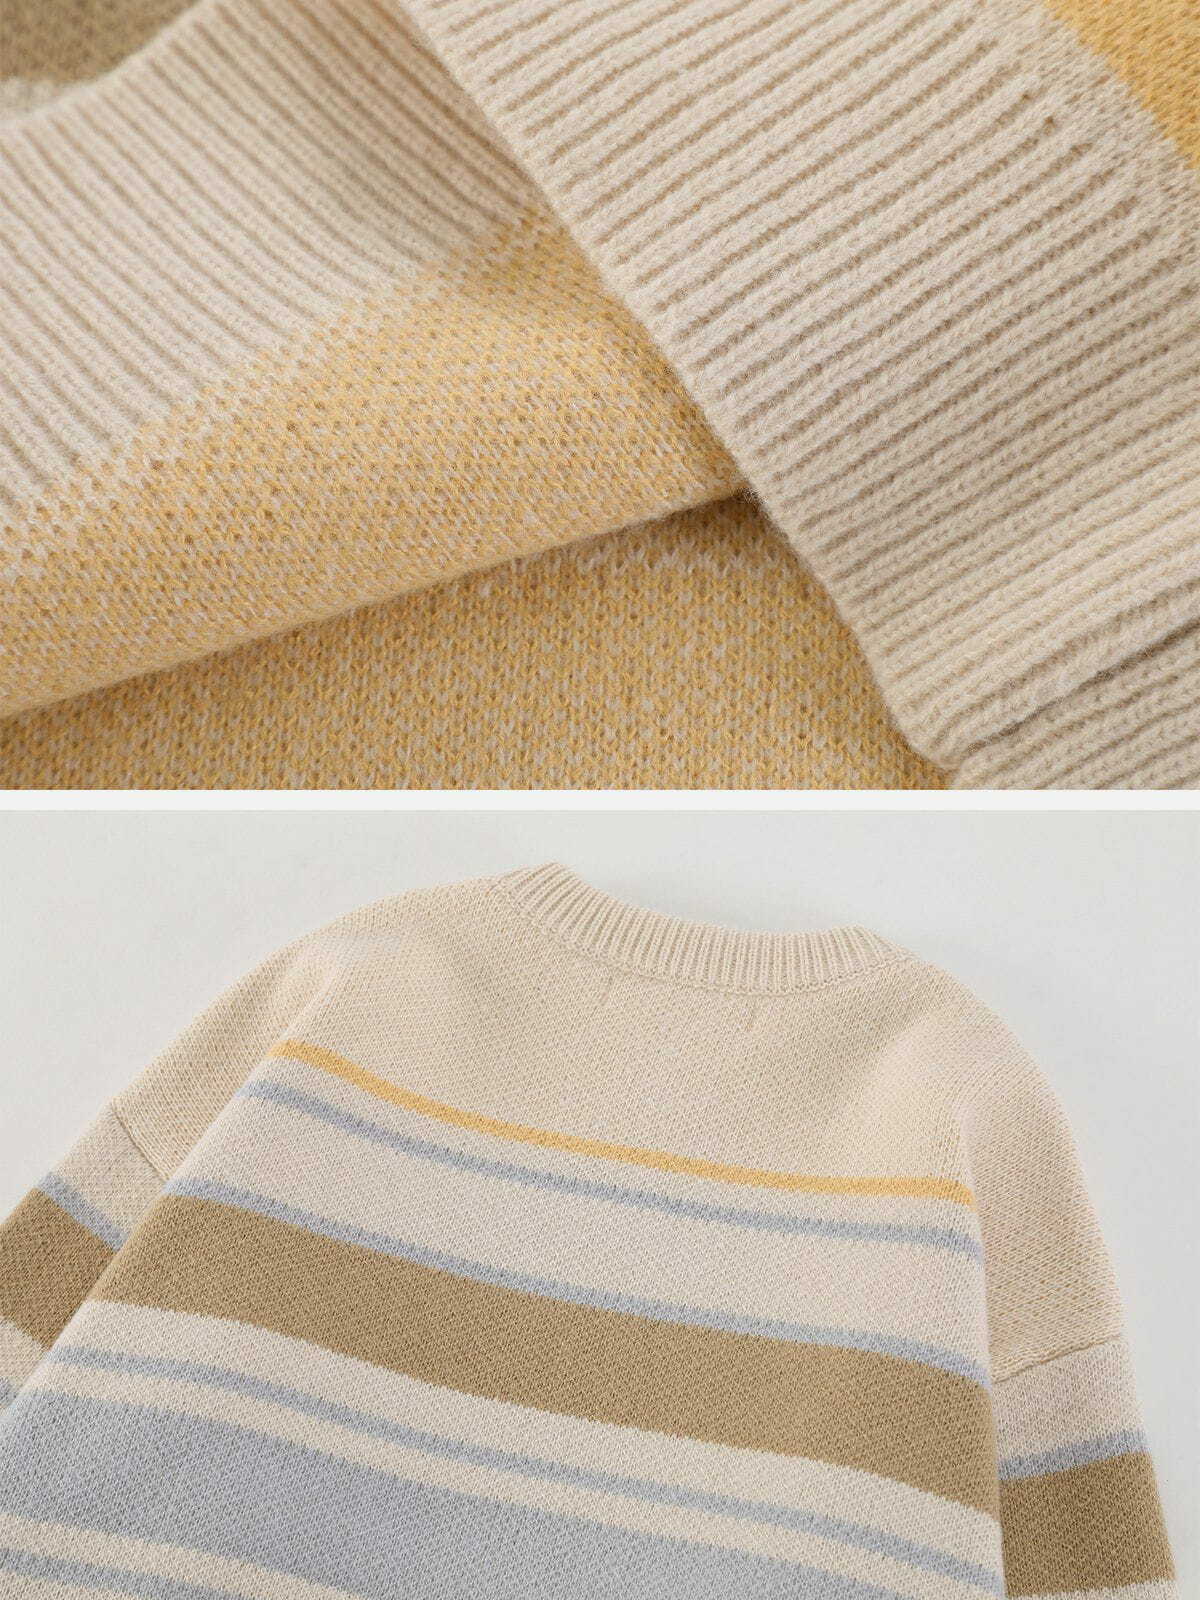 retro striped sweater vibrant & timeless fashion 1698